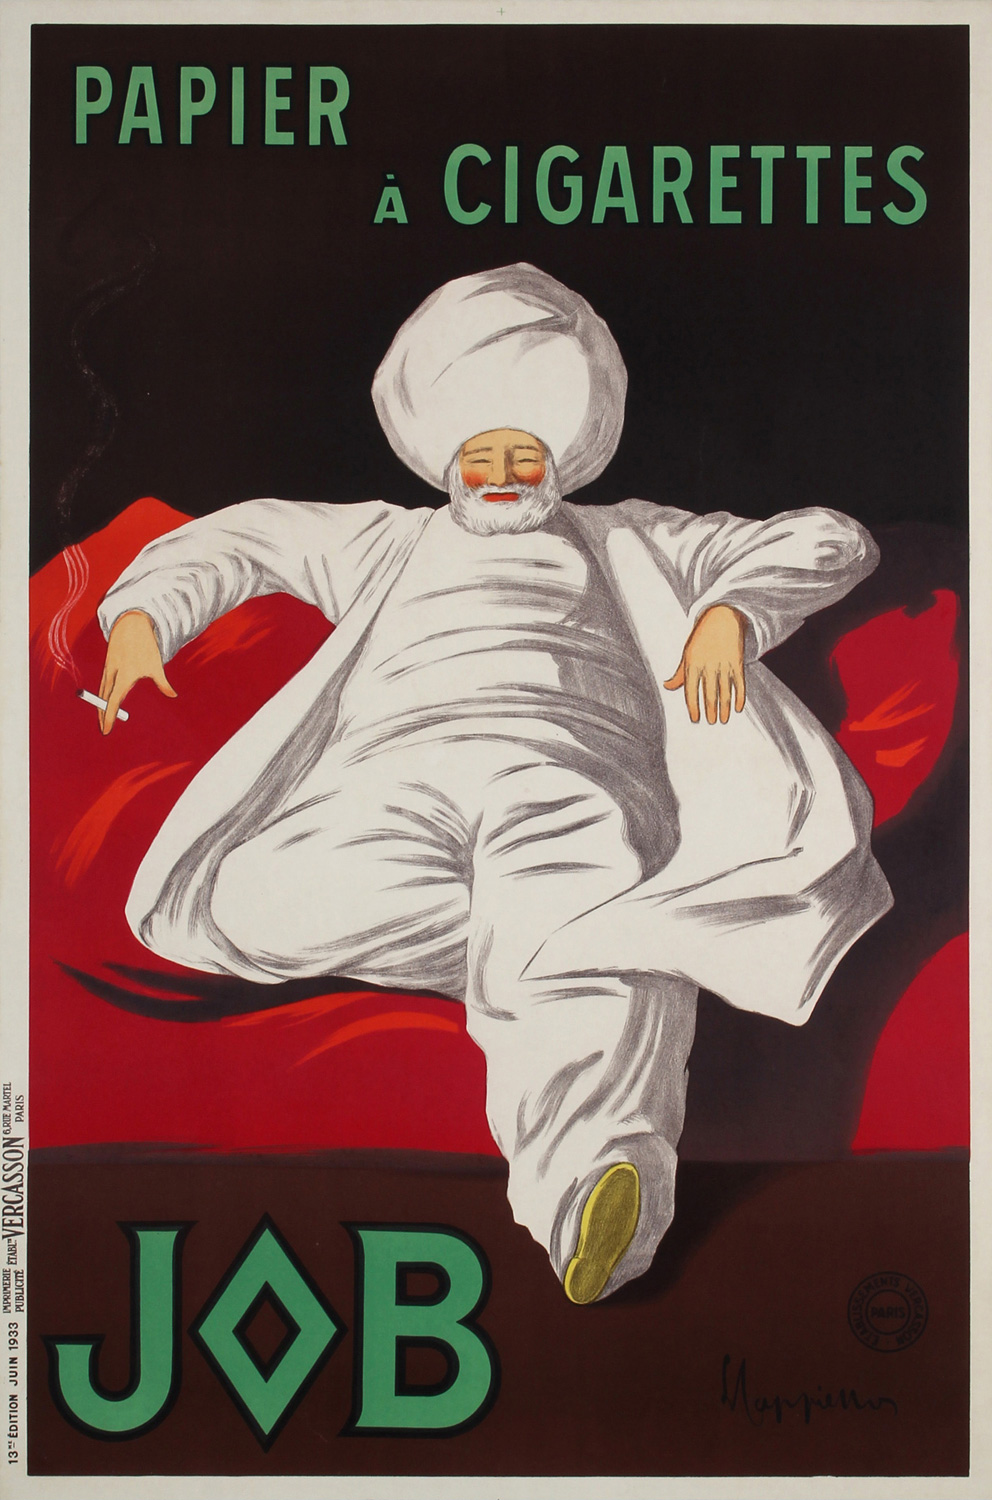 Cappiello, Job - Papier a Cigarettes, 1933